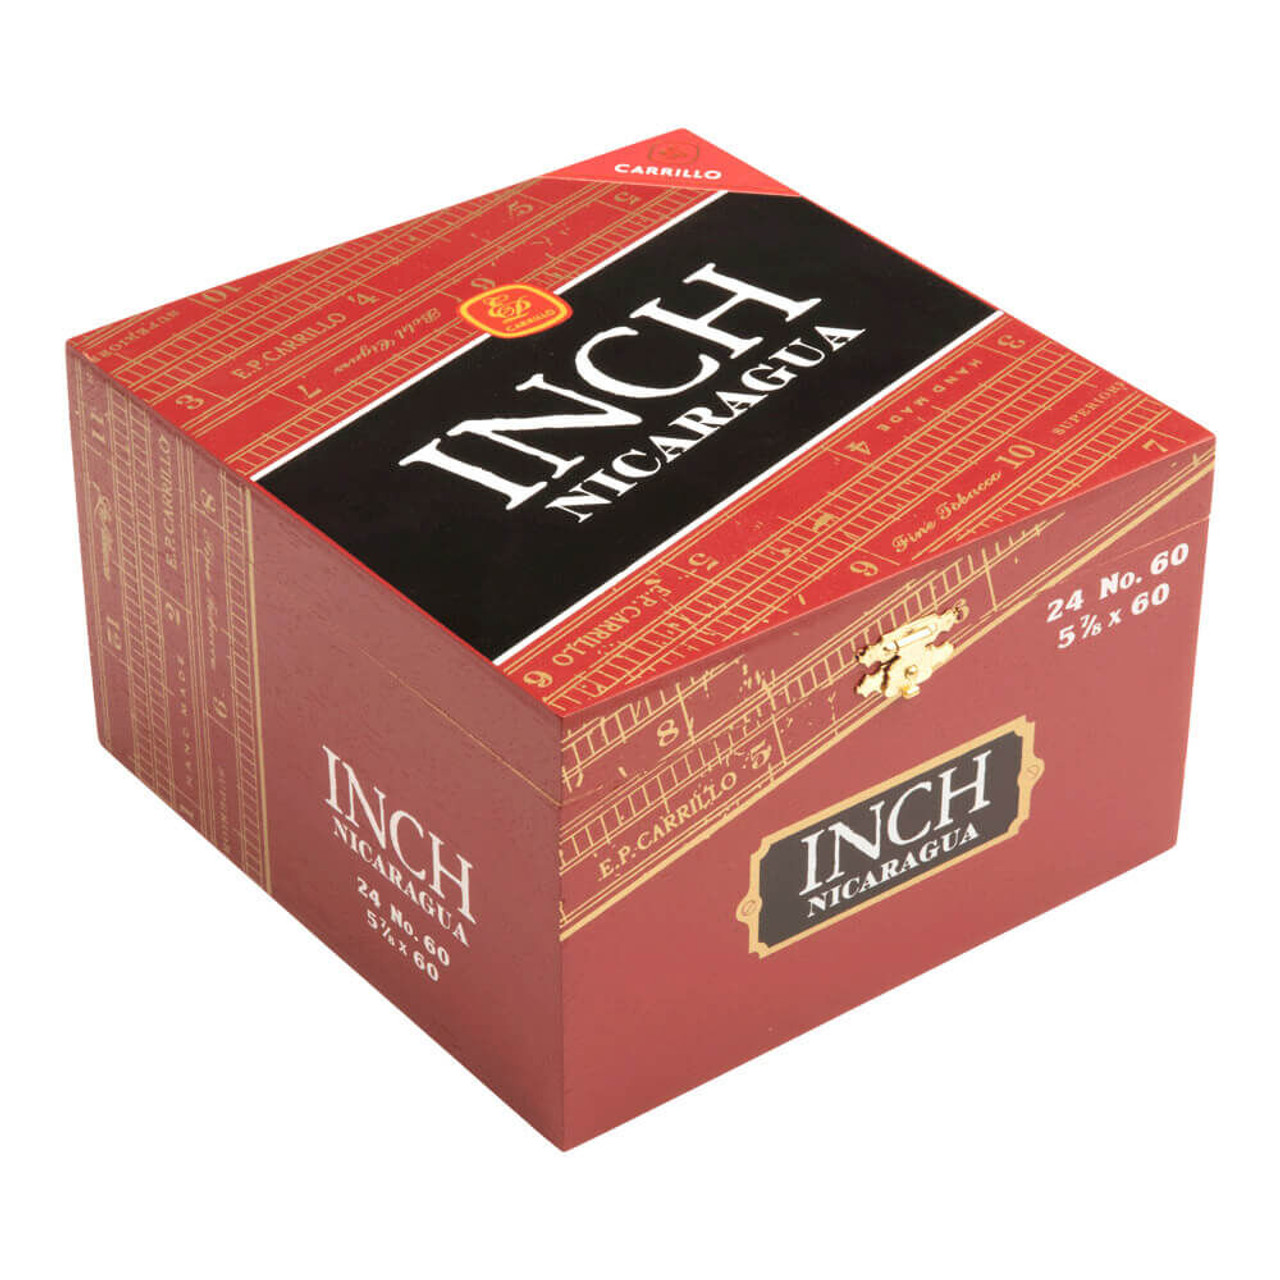 INCH Nicaragua by E.P. Carrillo No. 60 Cigars - 5.88 x 60 (Box of 24) *Box